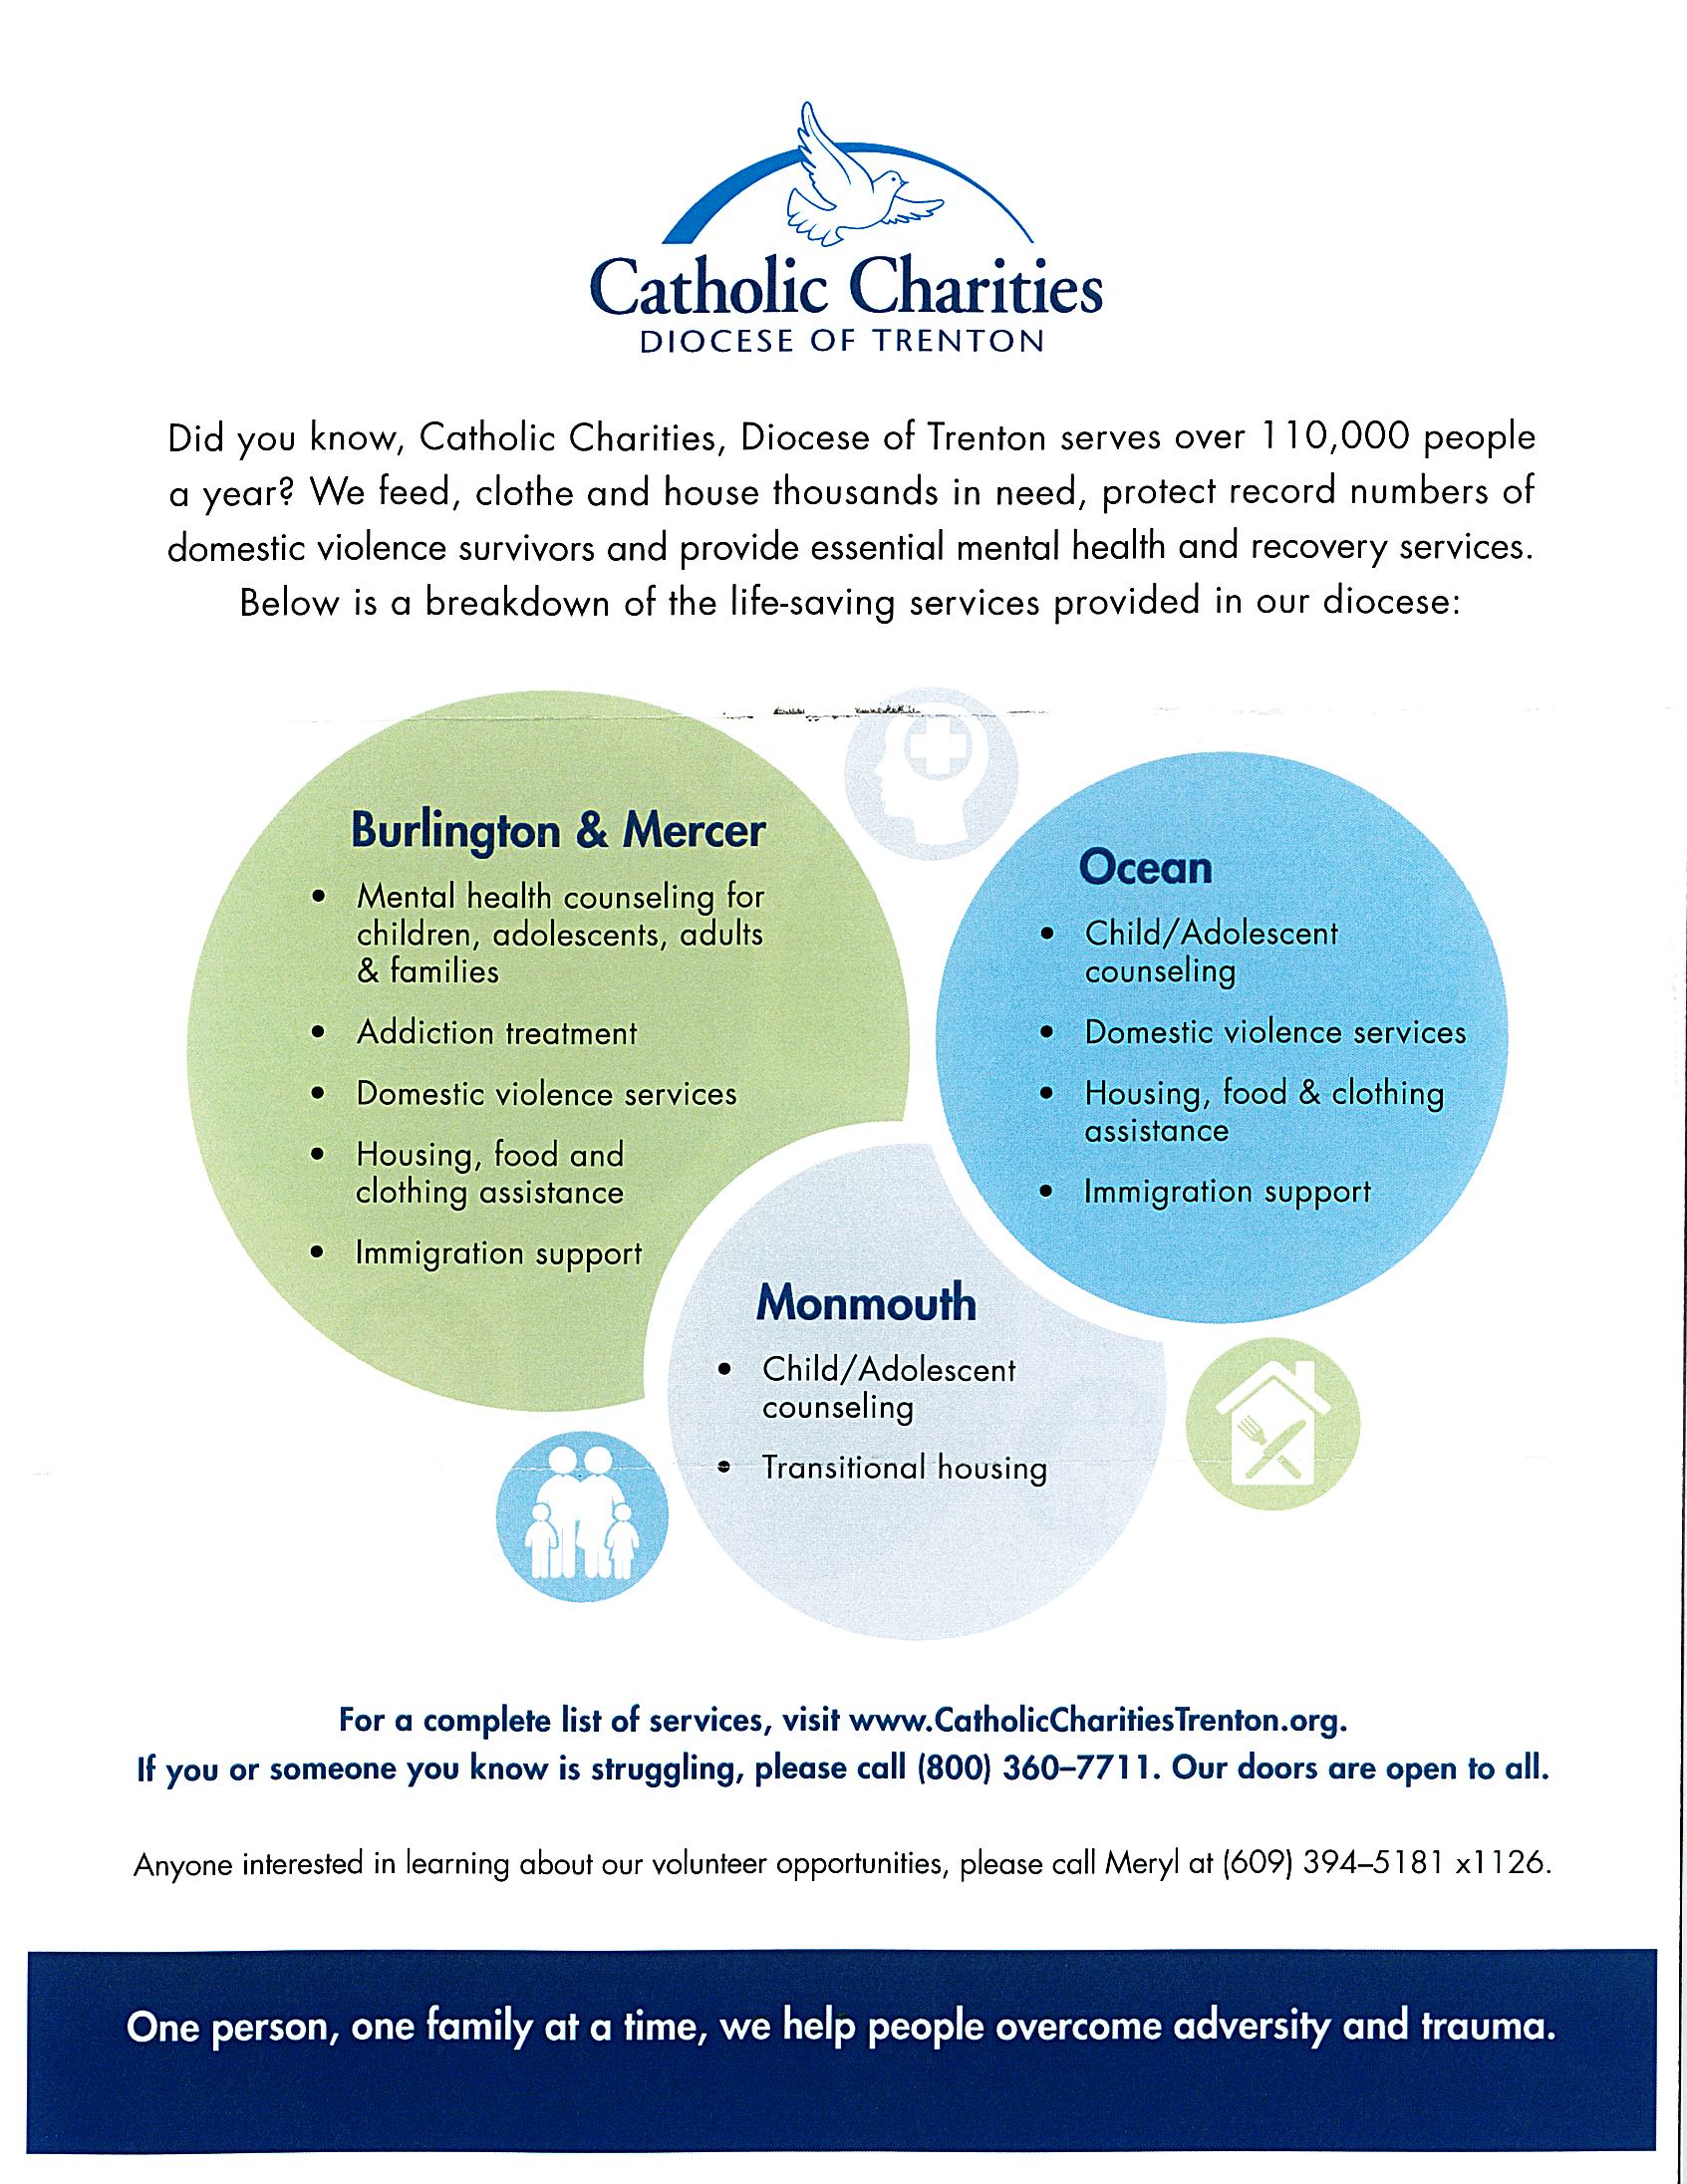 Catholic Charities helps